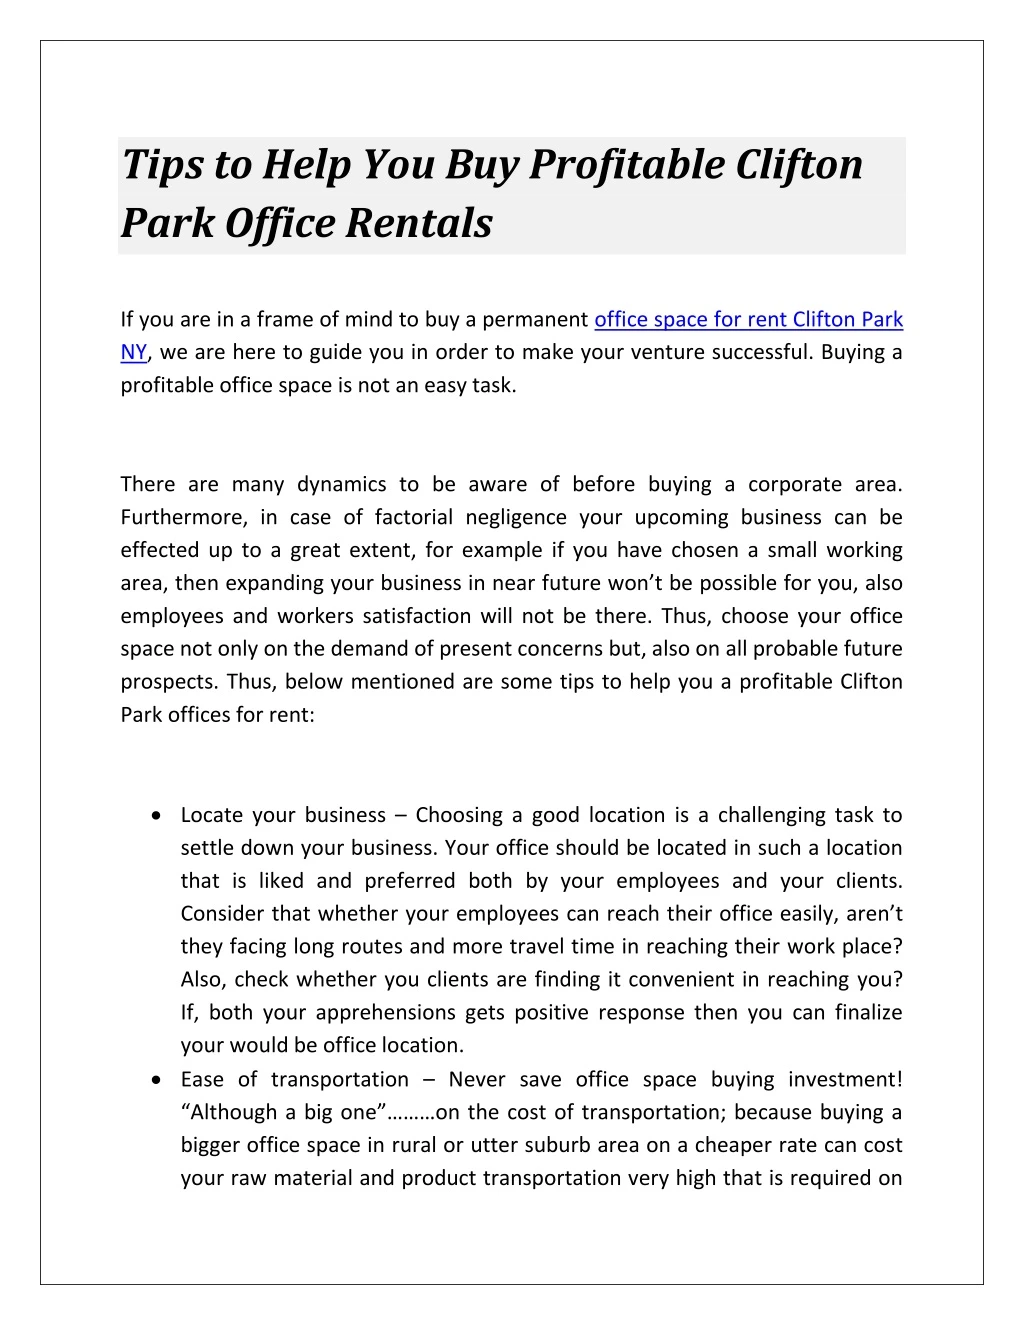 tips to help you buy profitable clifton park